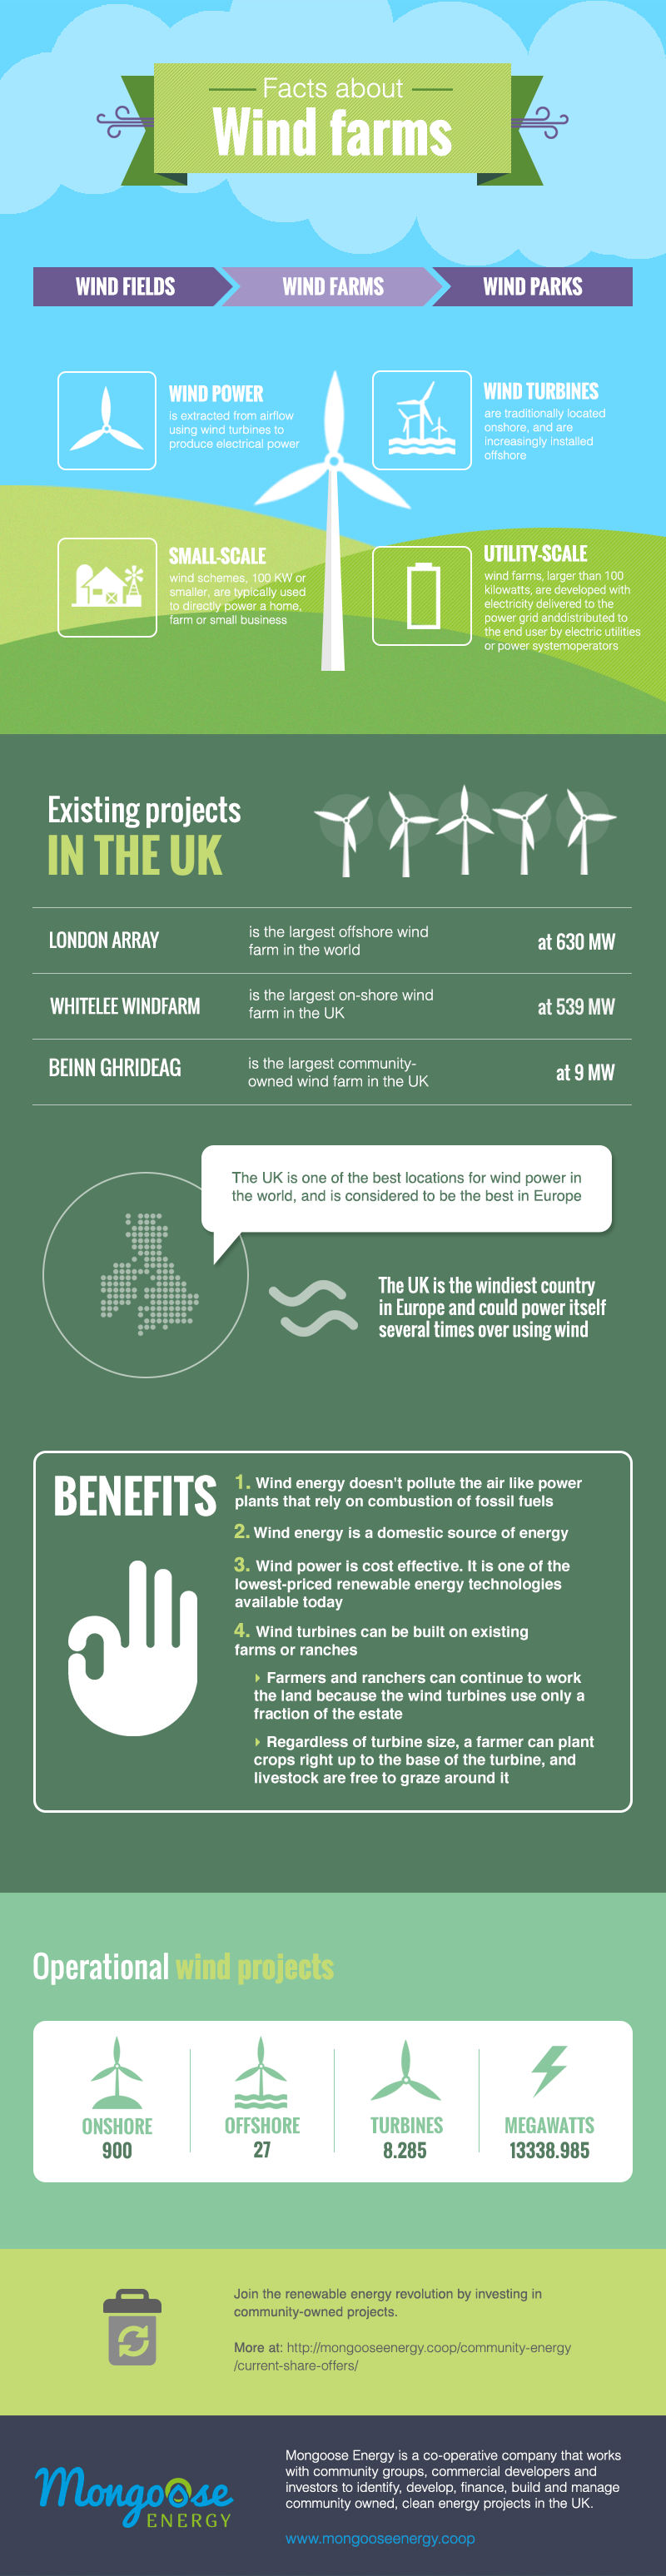 Diseño de infografía: "Facts about wind farms" -1